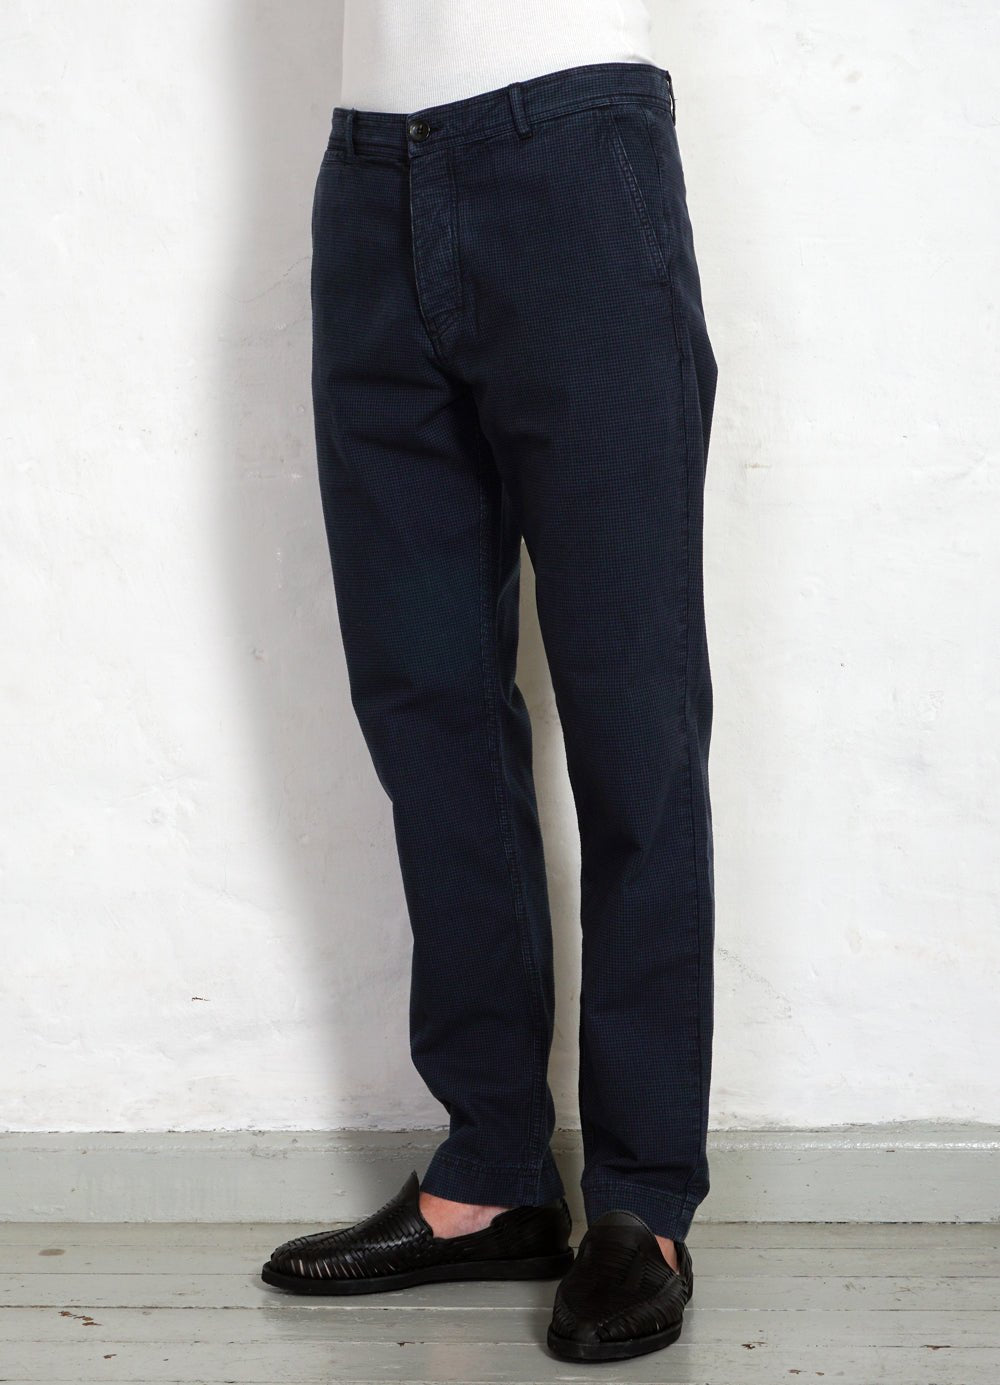 HANSEN GARMENTS - FRED | Regular Cut Work Trousers | Black Navy - HANSEN Garments